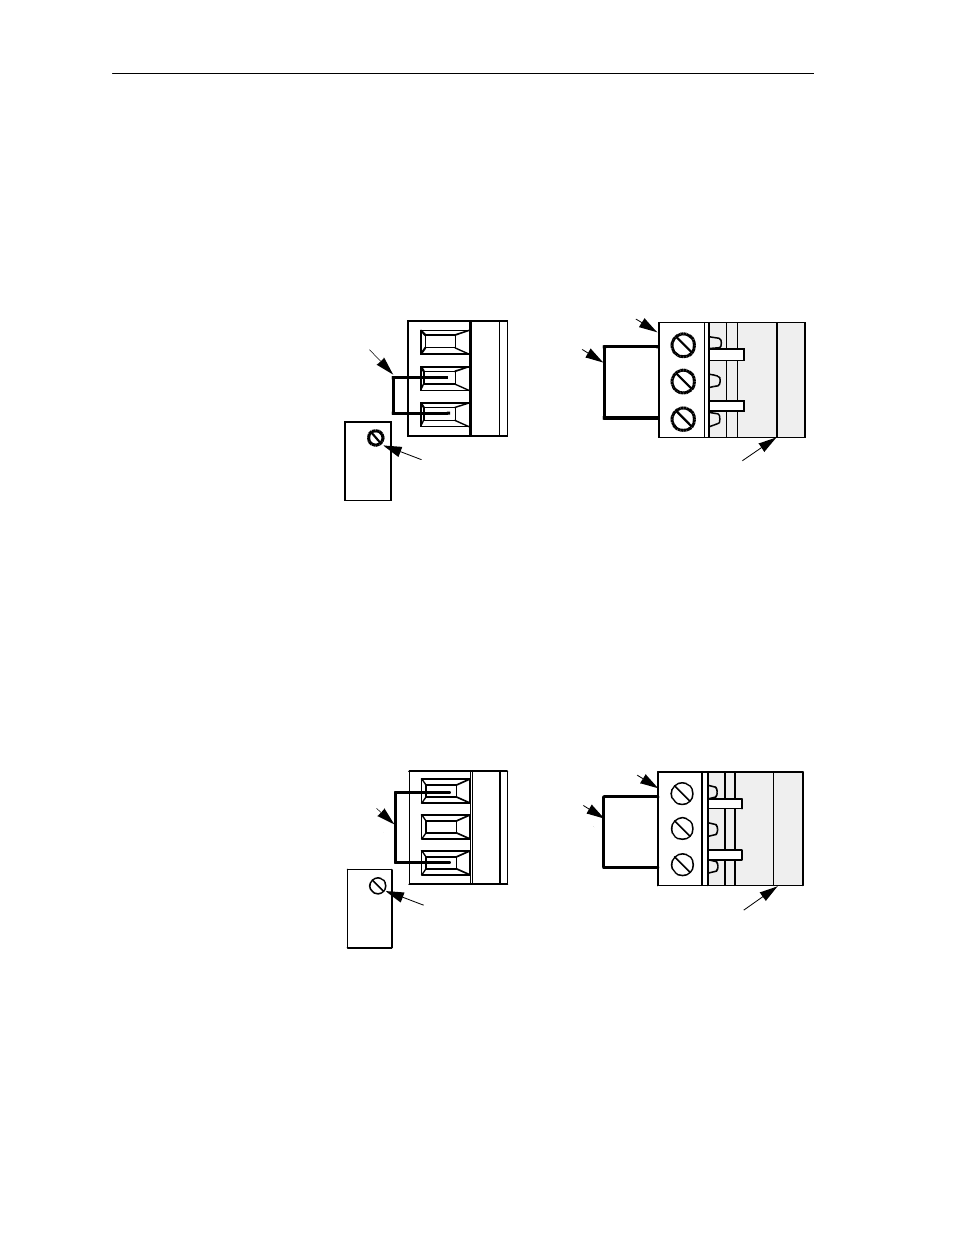 Module configuration and adjustments, Module configuration and adjustments -6 | Rockwell Automation 1747-DTAM-E,D17476.1 Data Table Access Module (DTAM) User Manual | Page 20 / 116